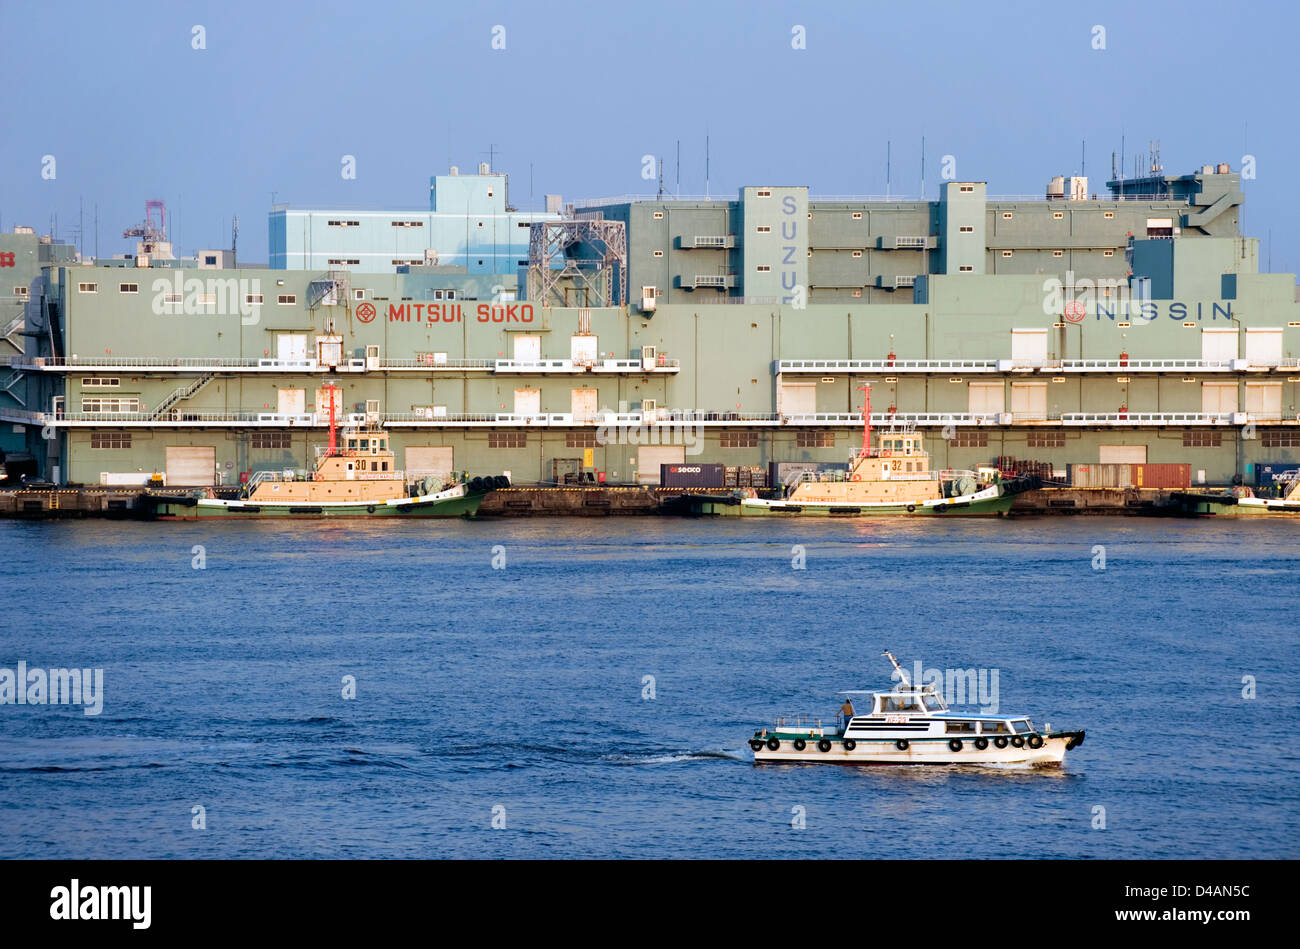 Barche rimorchiatore Ormeggiato accanto a magazzini sulla Baia Yokohama waterfront, Yokohama Kanagawa, Giappone Foto Stock